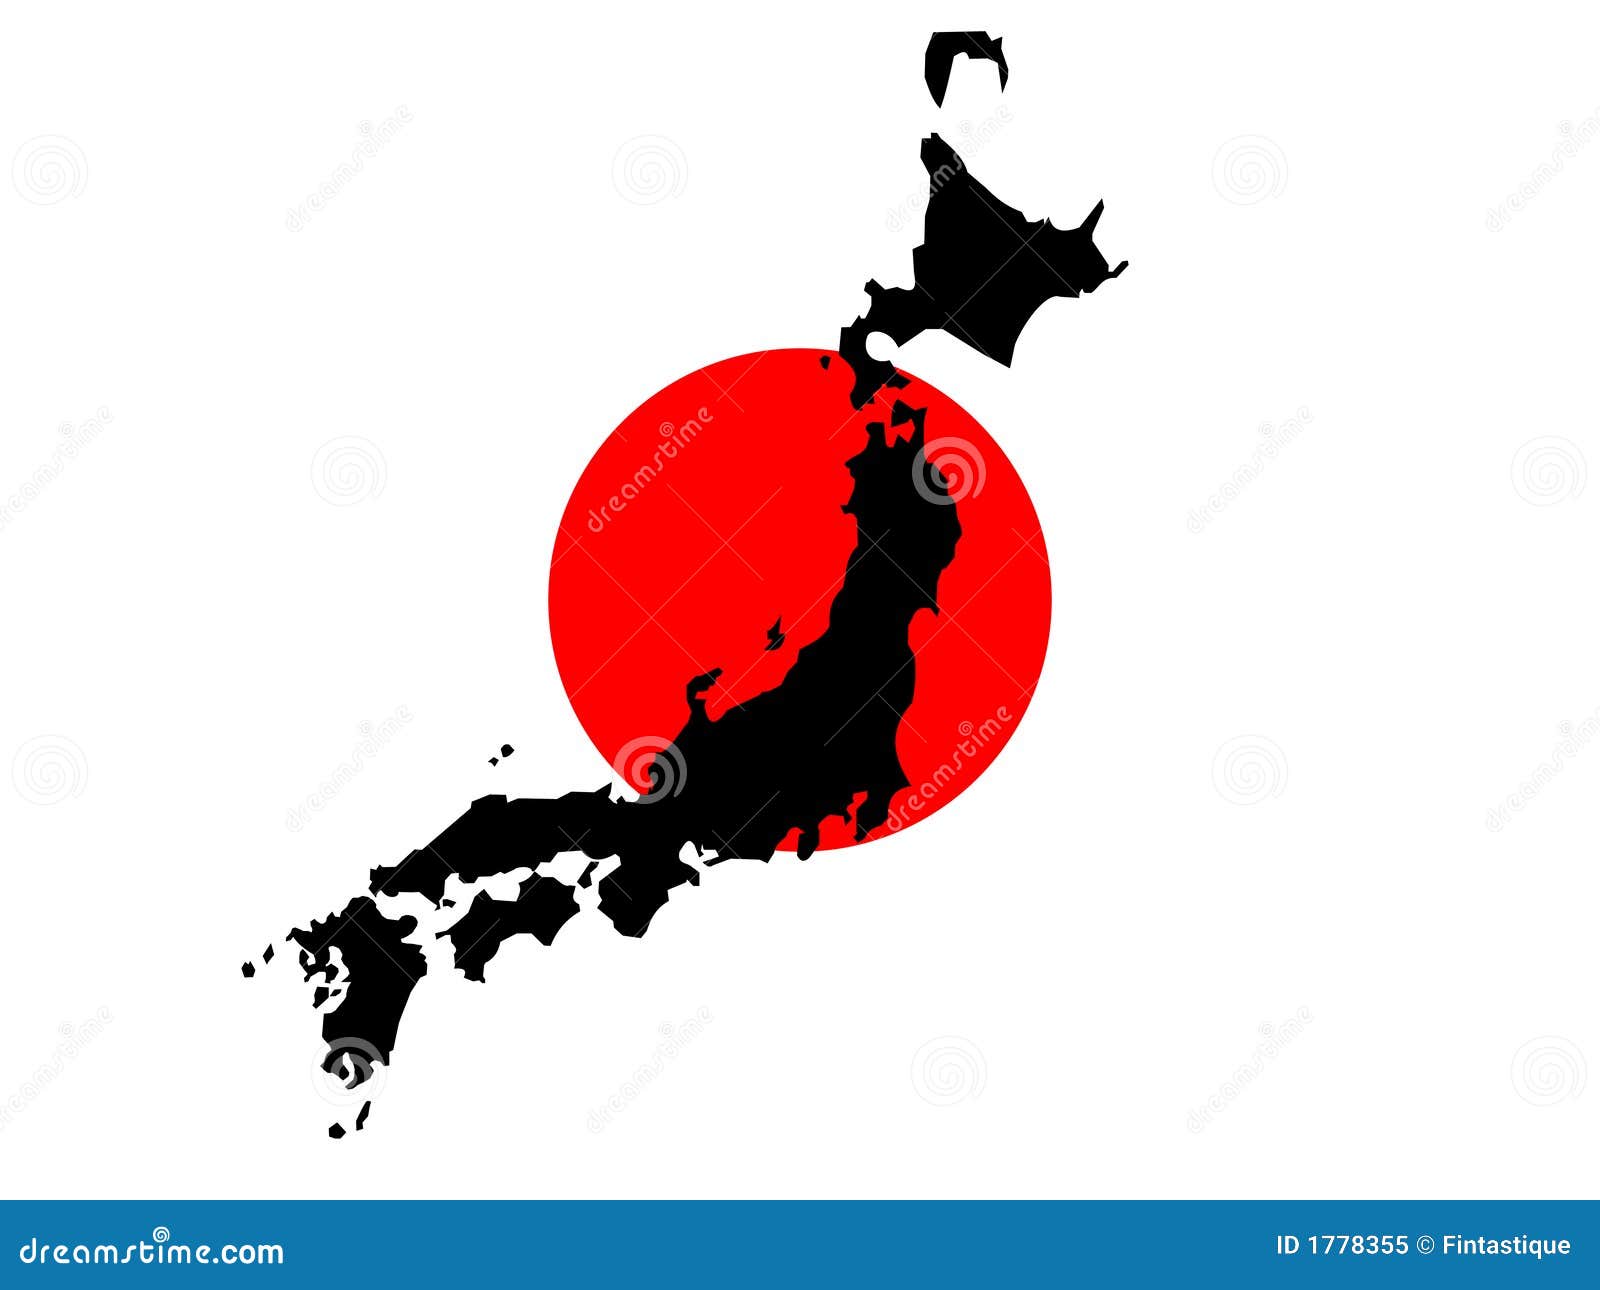 https://thumbs.dreamstime.com/z/map-japan-japanese-flag-1778355.jpg